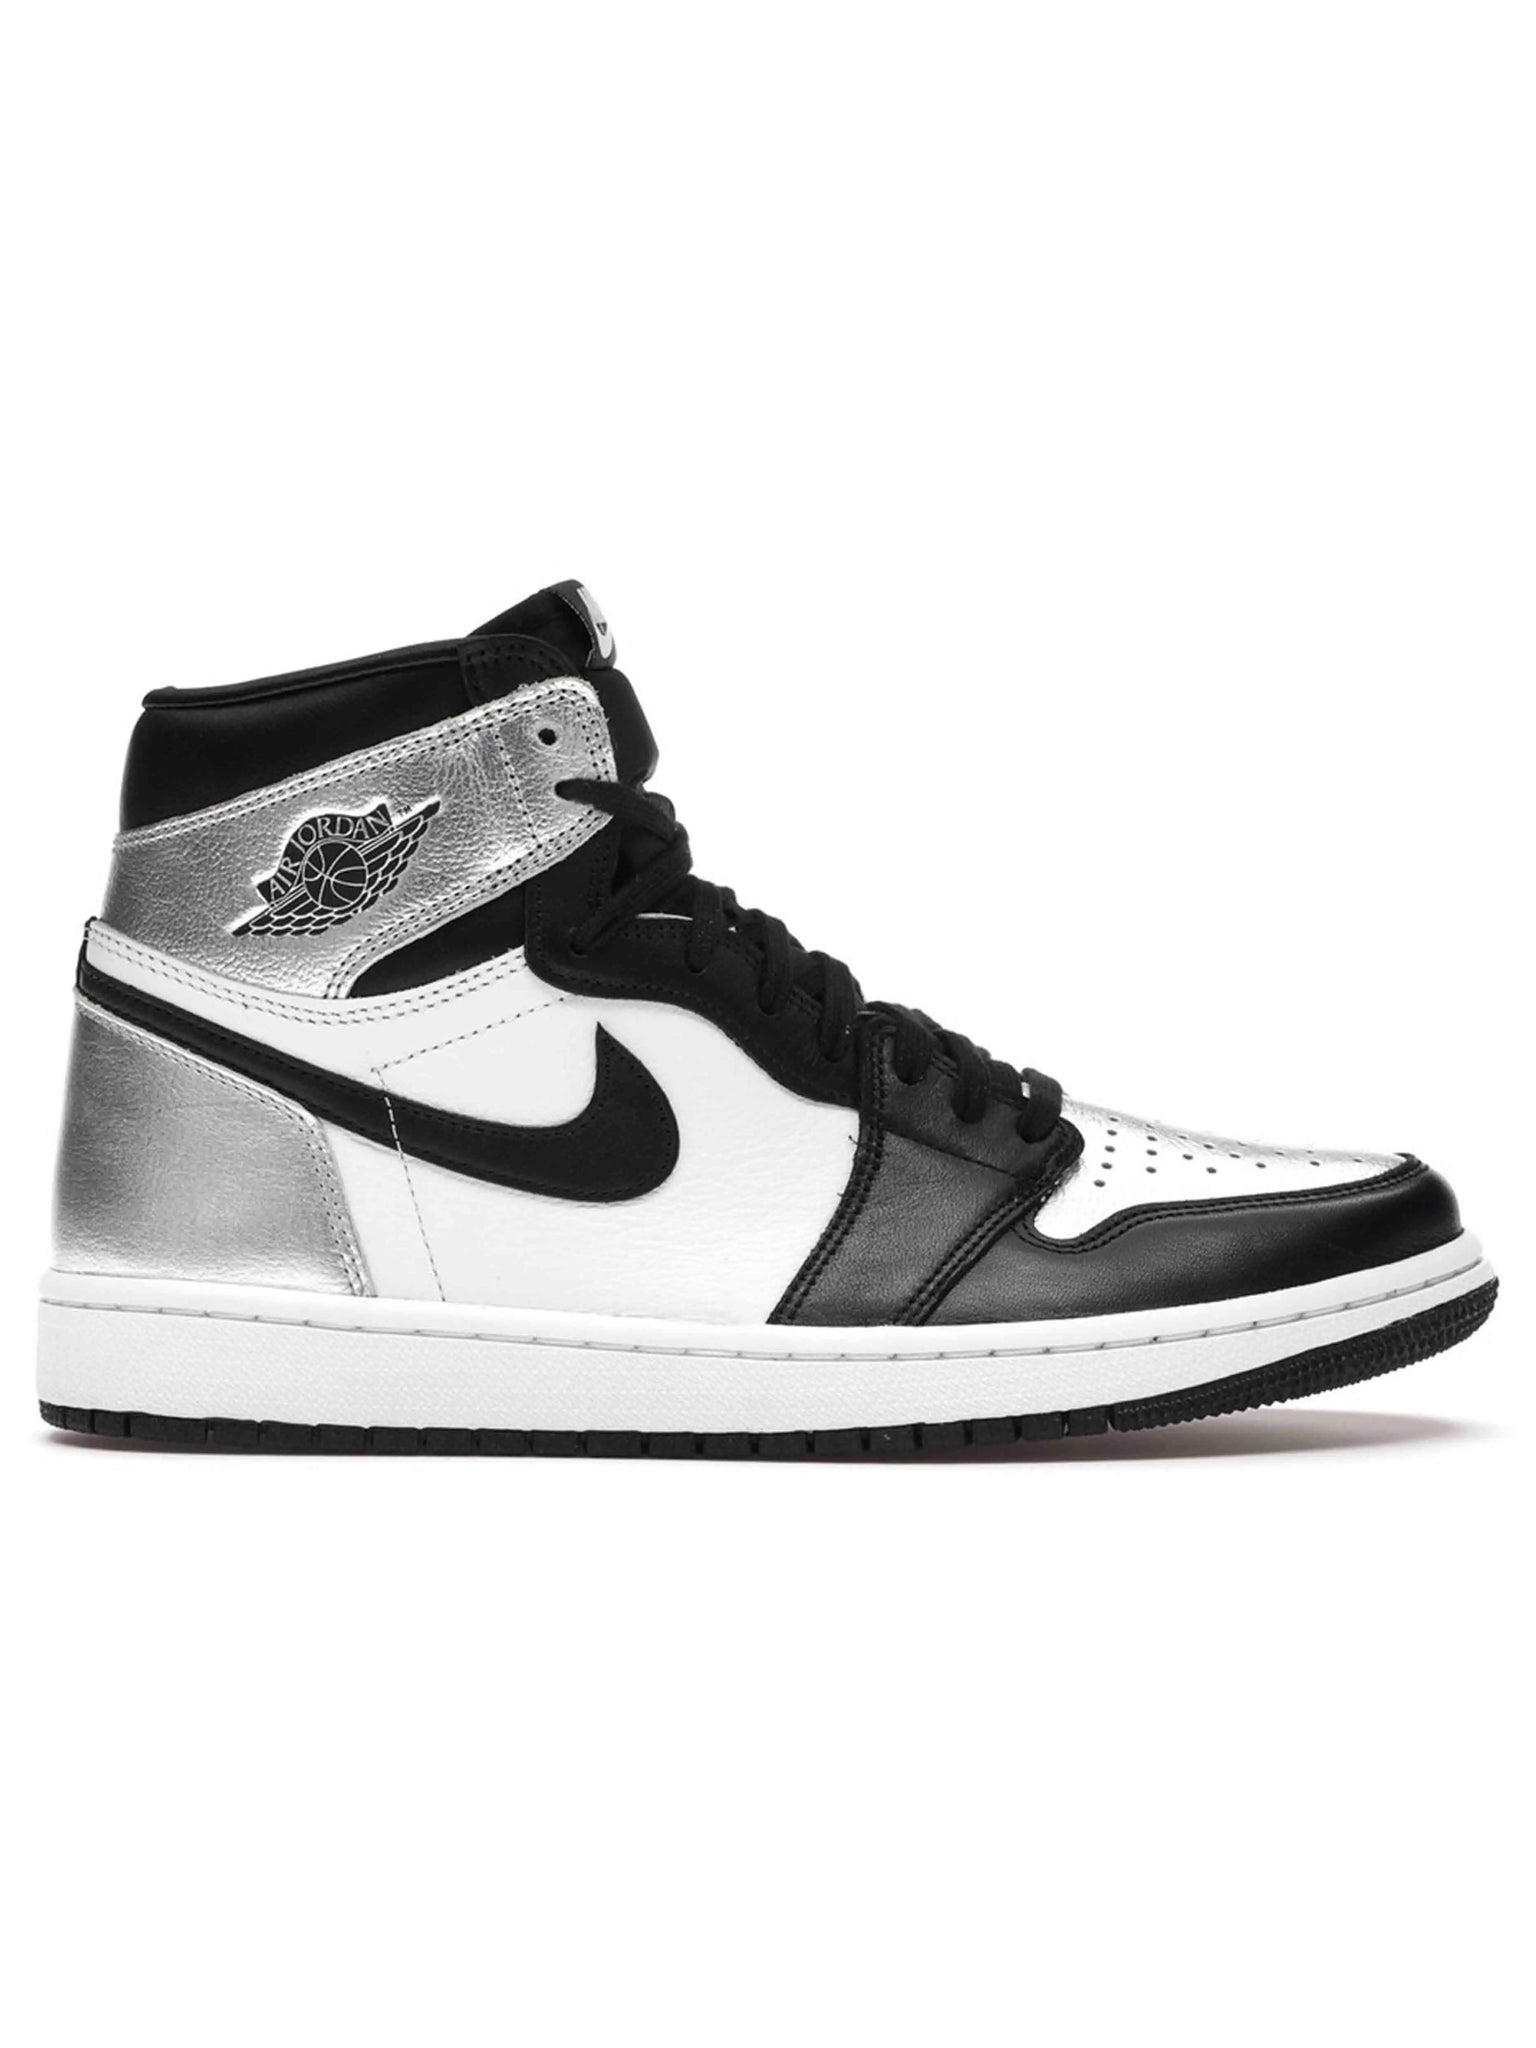 Nike Air Jordan 1 Retro High Silver Toe [W] Prior